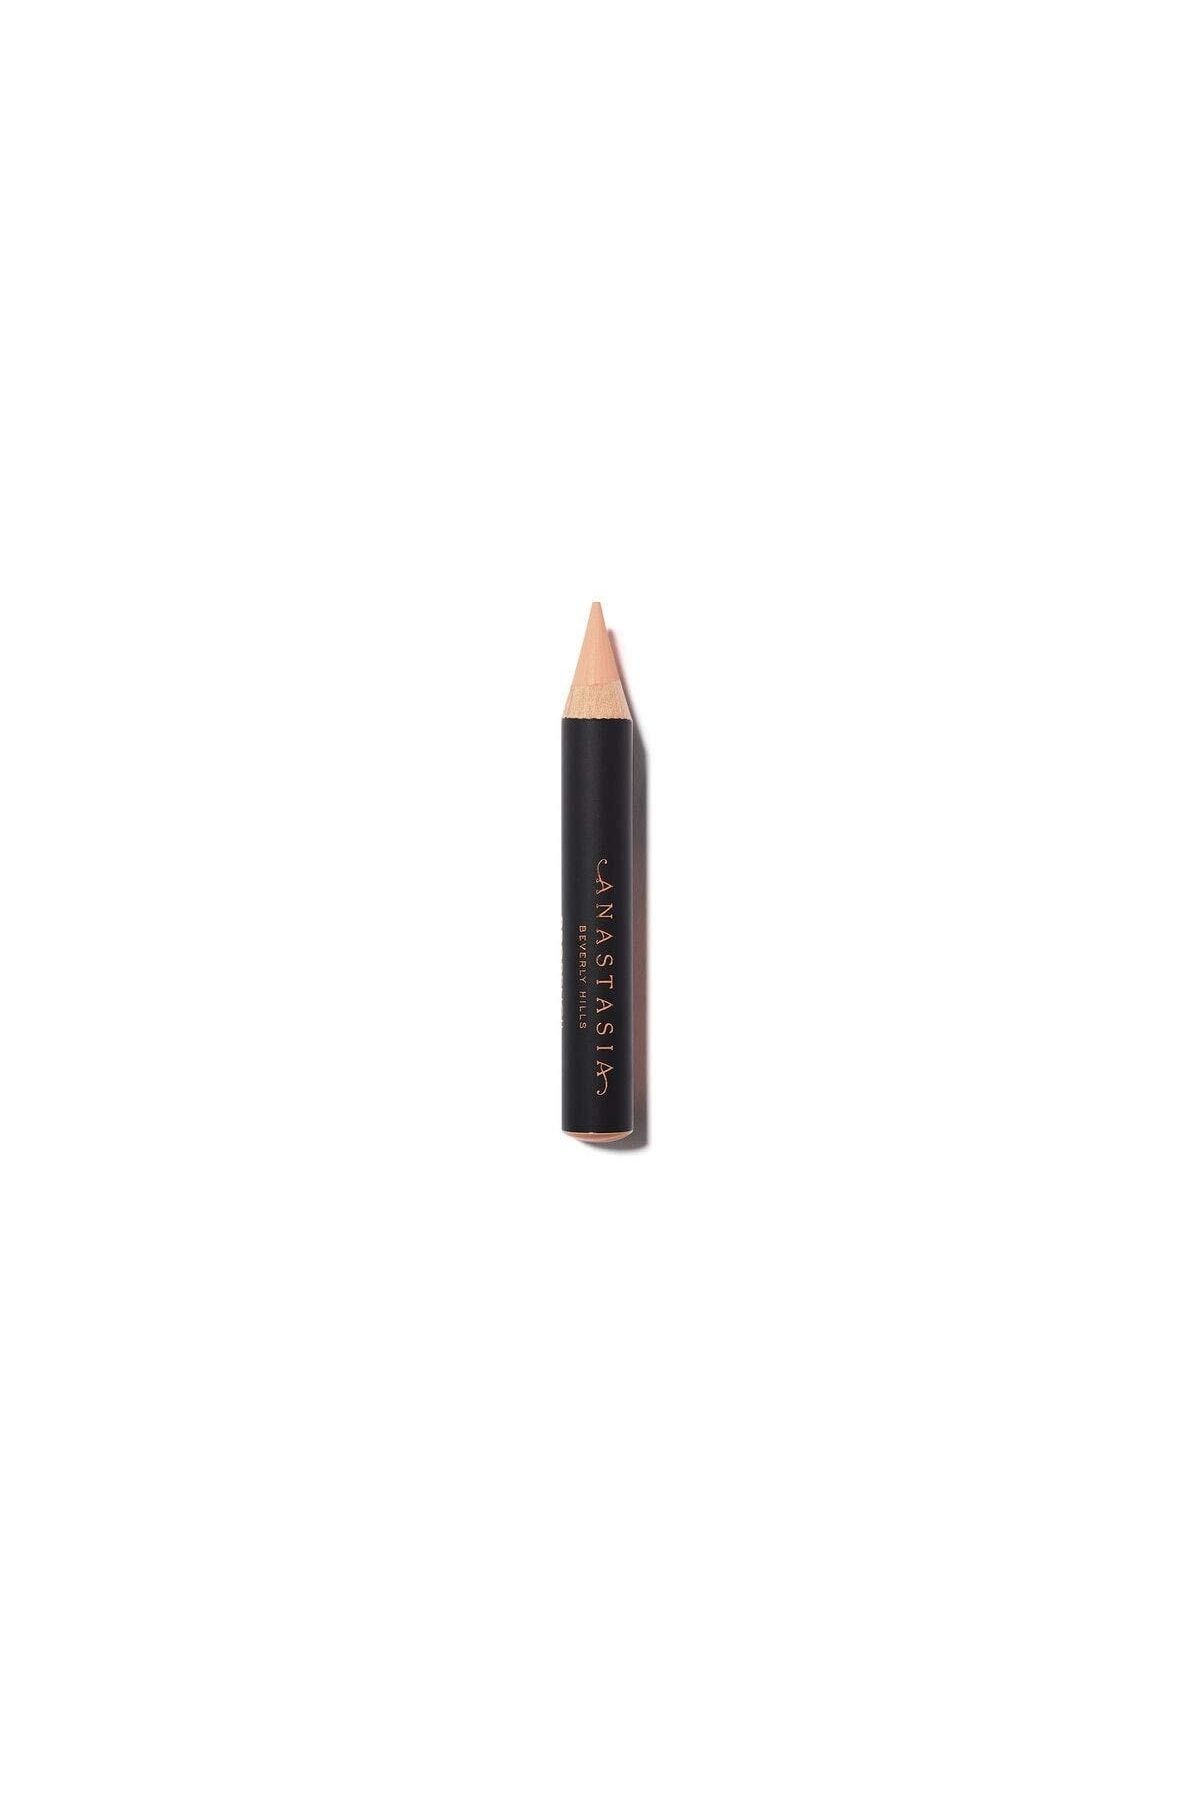 Anastasia Beverly Hills Pro Pencil Eyebrow Pencil Base 1